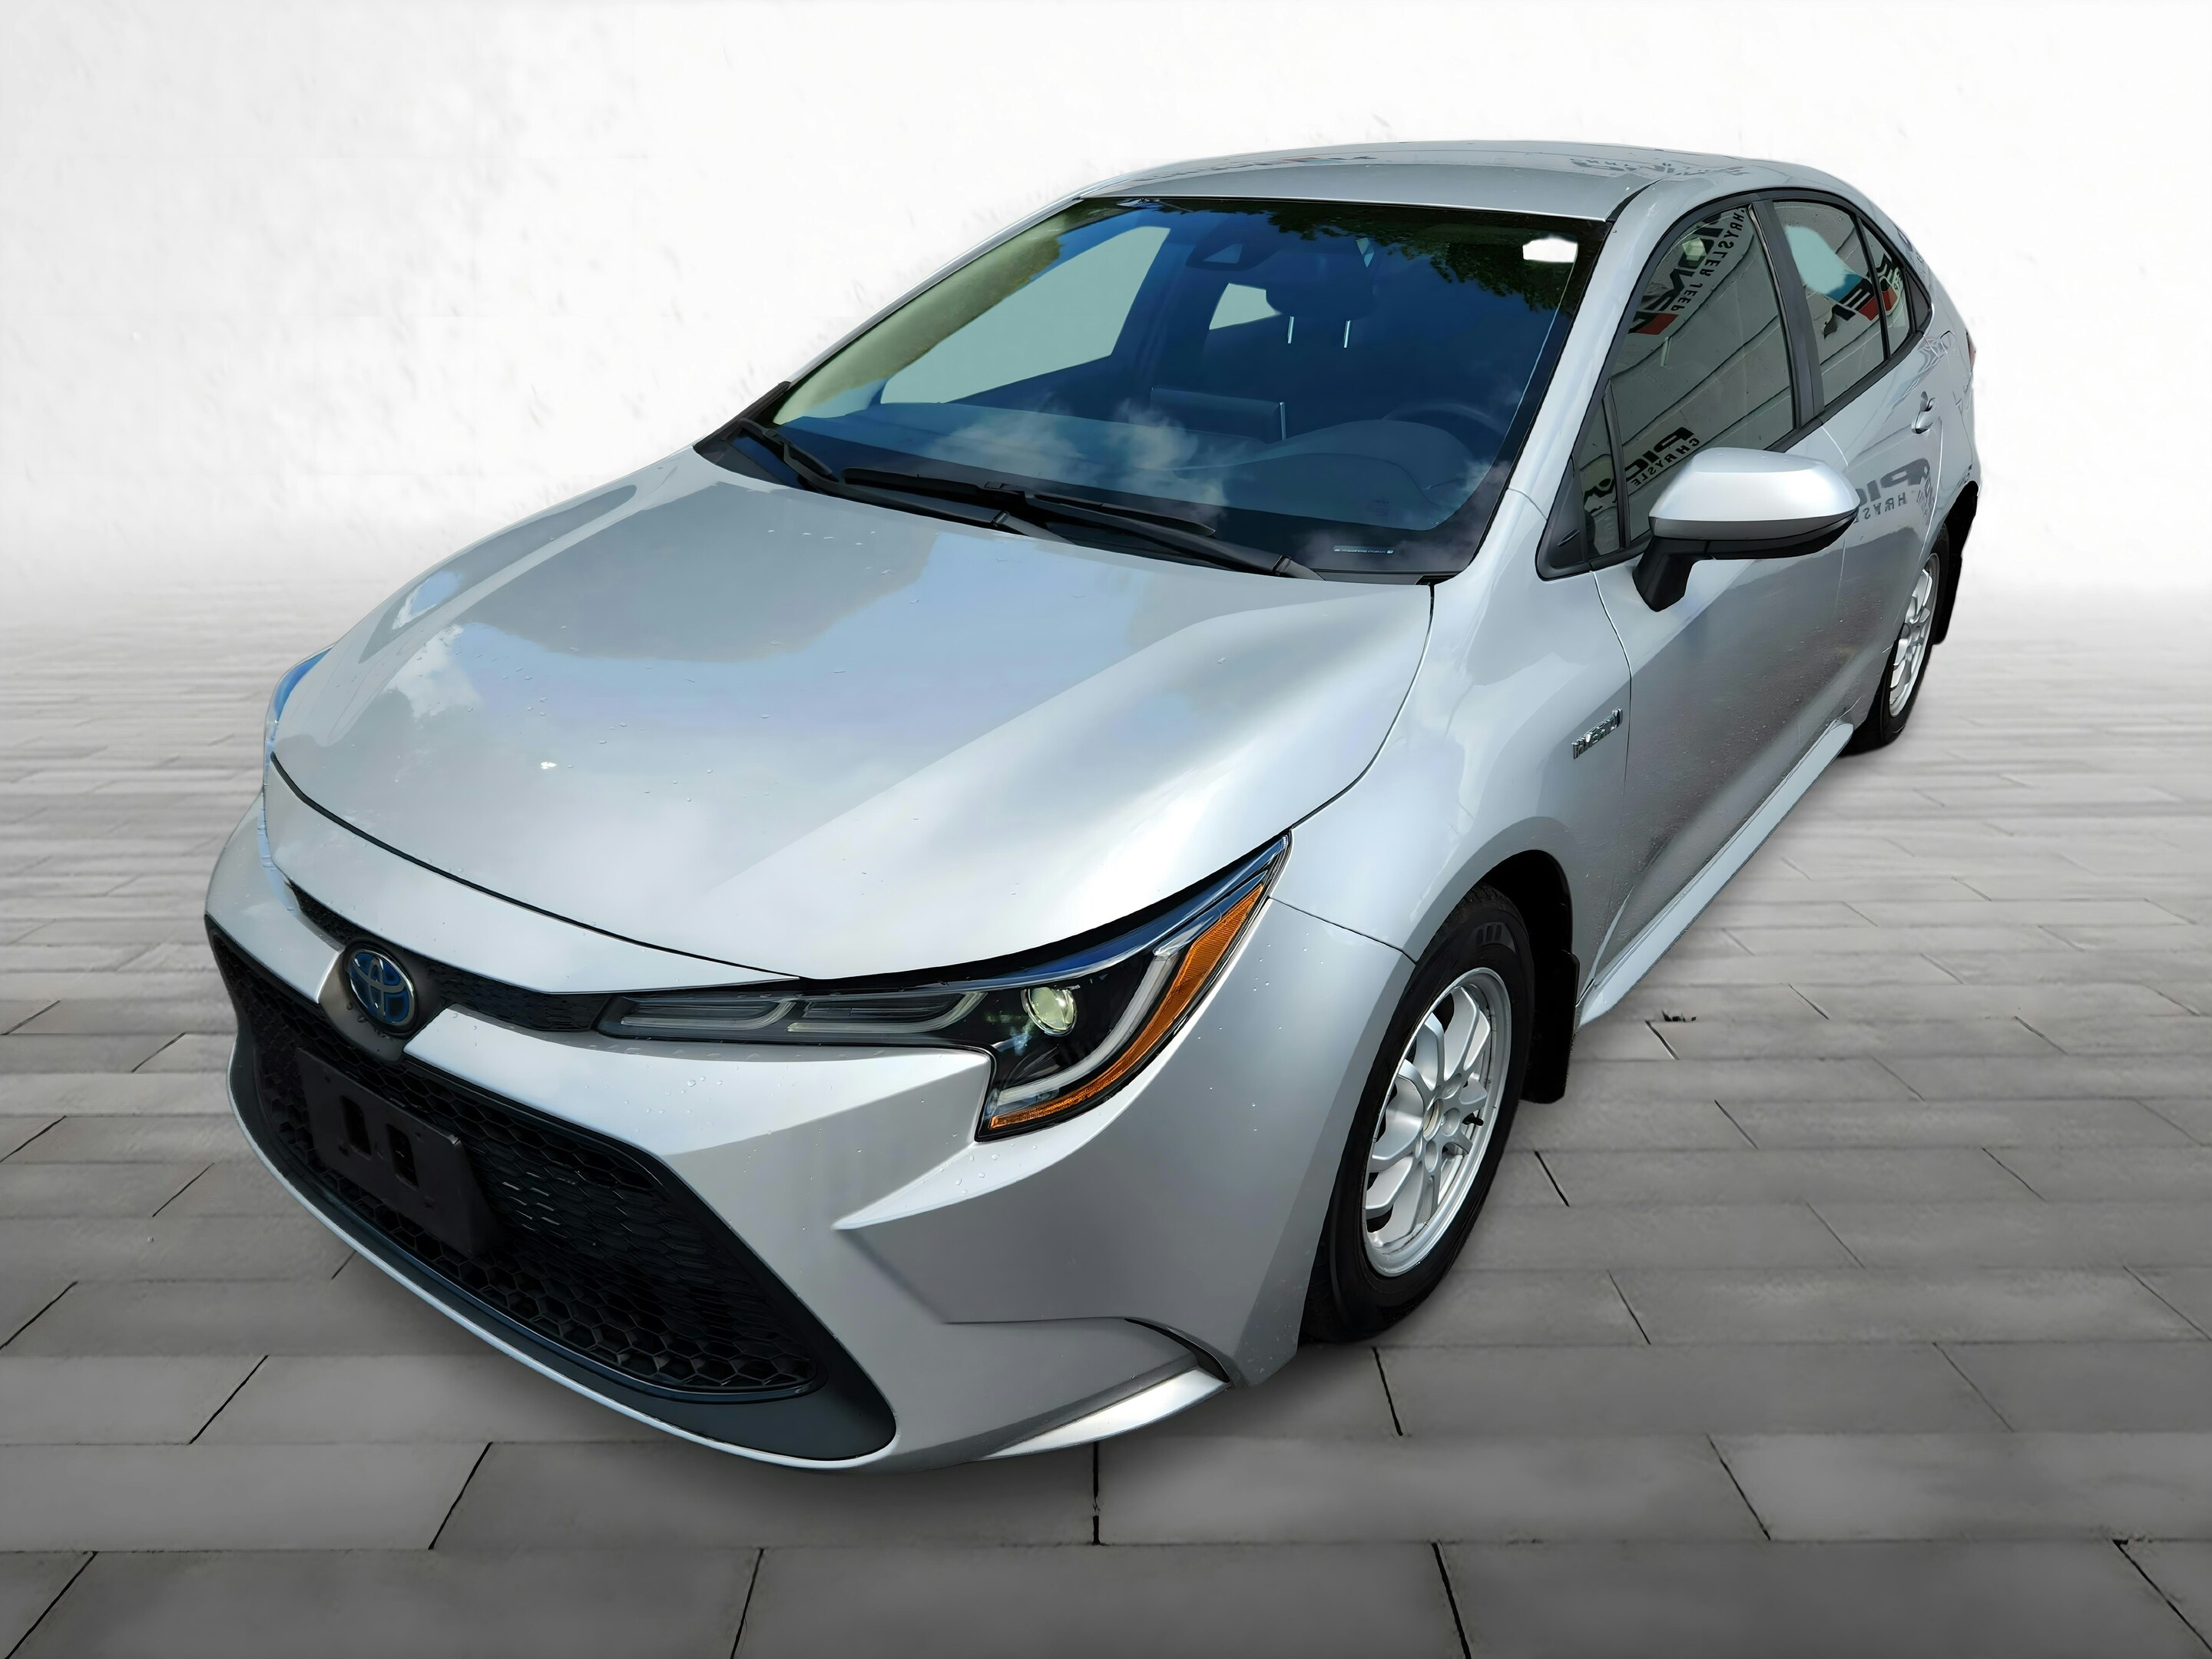 2021 Toyota Corolla Hybrid CVT  - Heated Seats - $202 B/W [
  "Heated